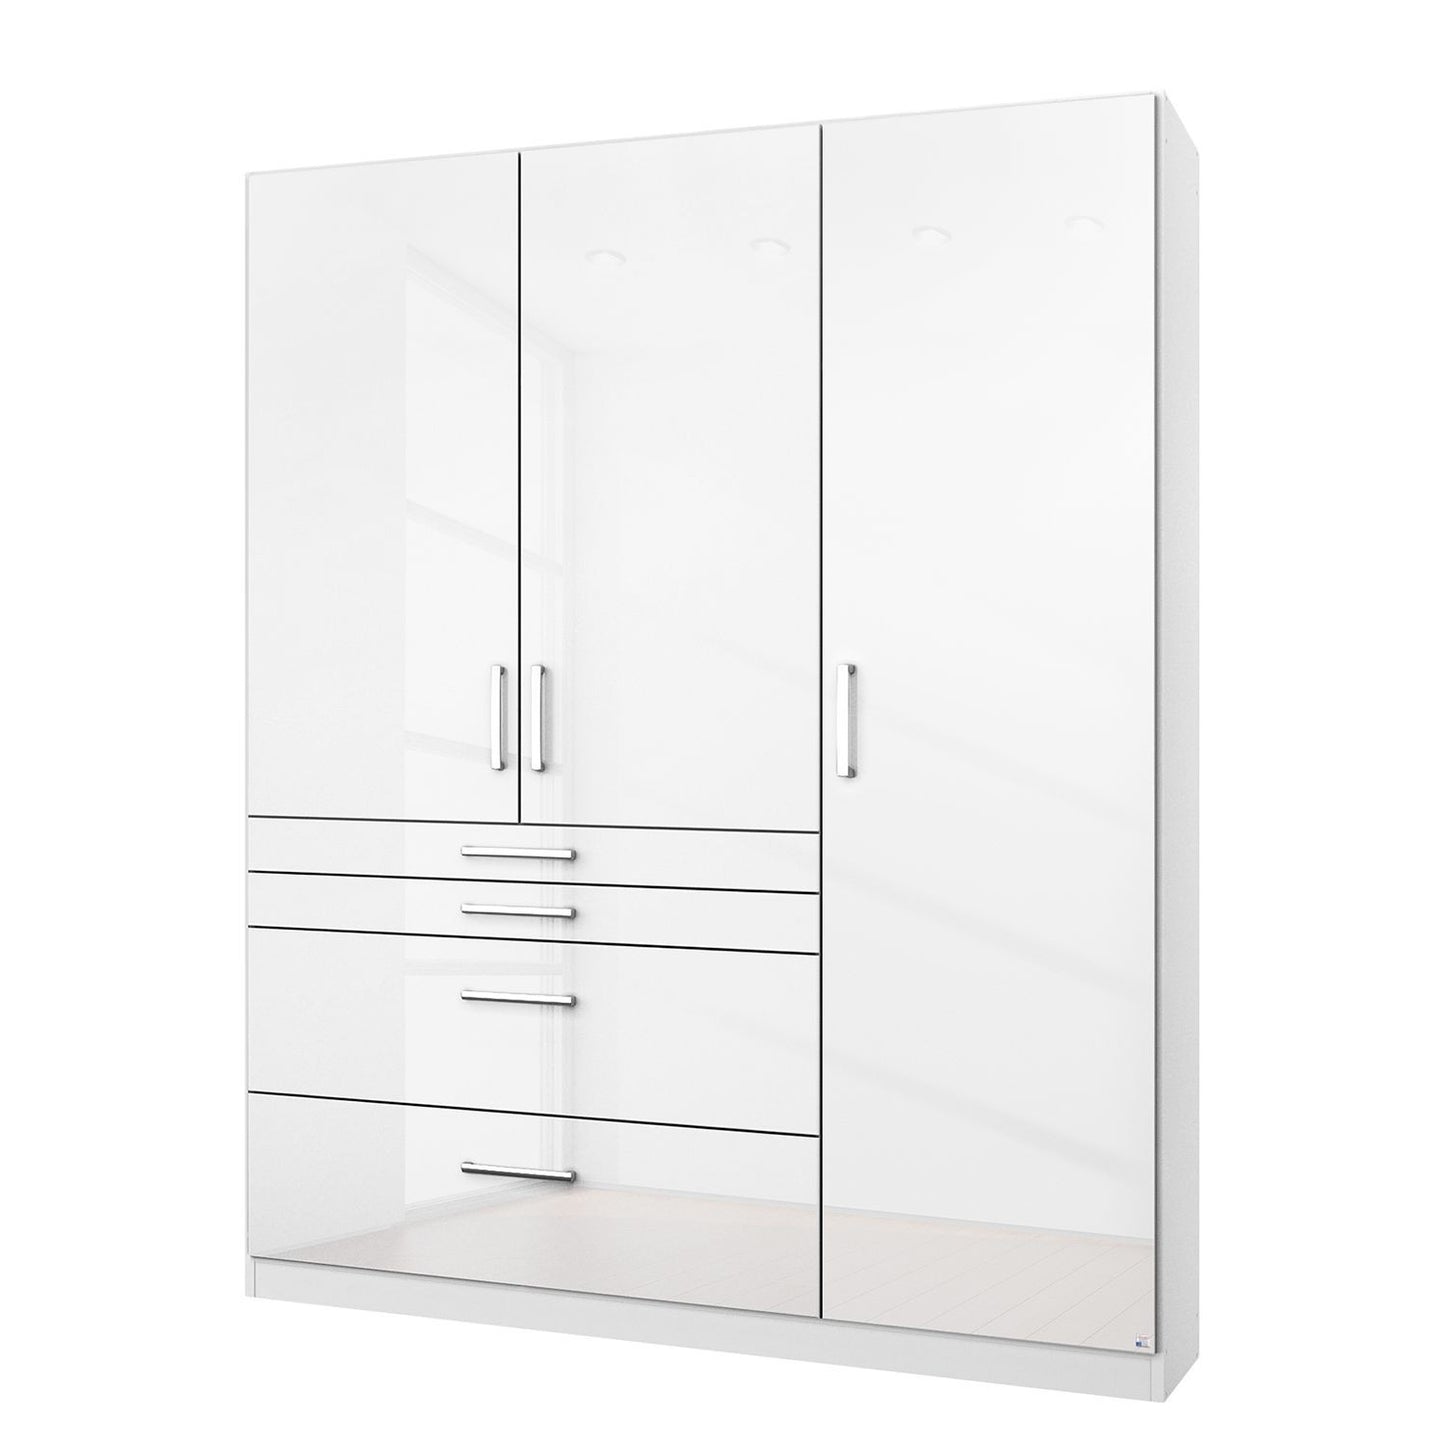 Rauch Harburg 3door wardrobe with drawers in white gloss